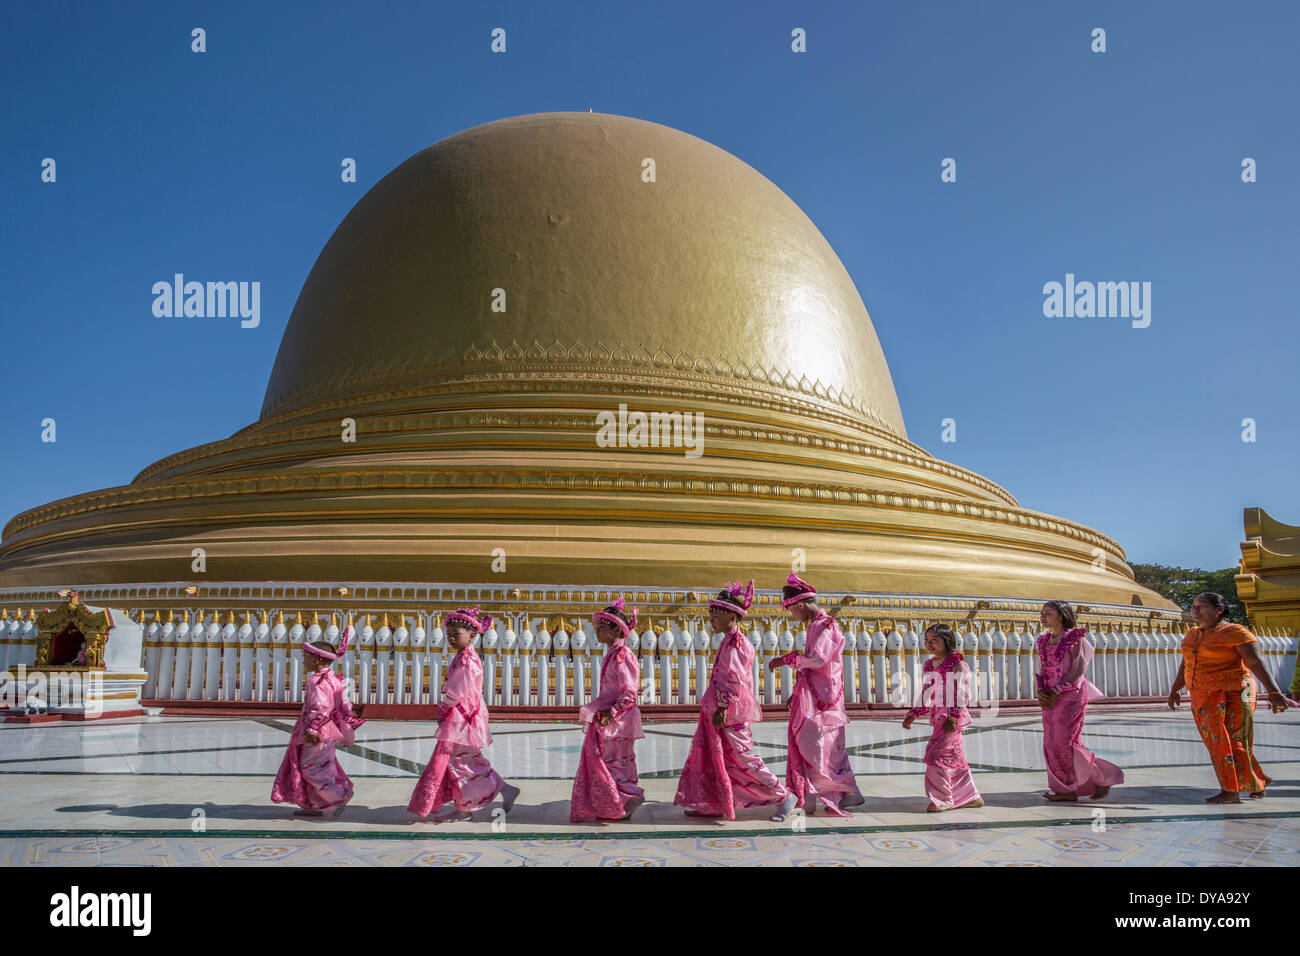 Asia Birmania Myanmar Mandalay Sagaing Kaung Hmu Taw arquitectura ciudad ceremonia coloridos colores famosa pagoda dorada golden, Foto de stock